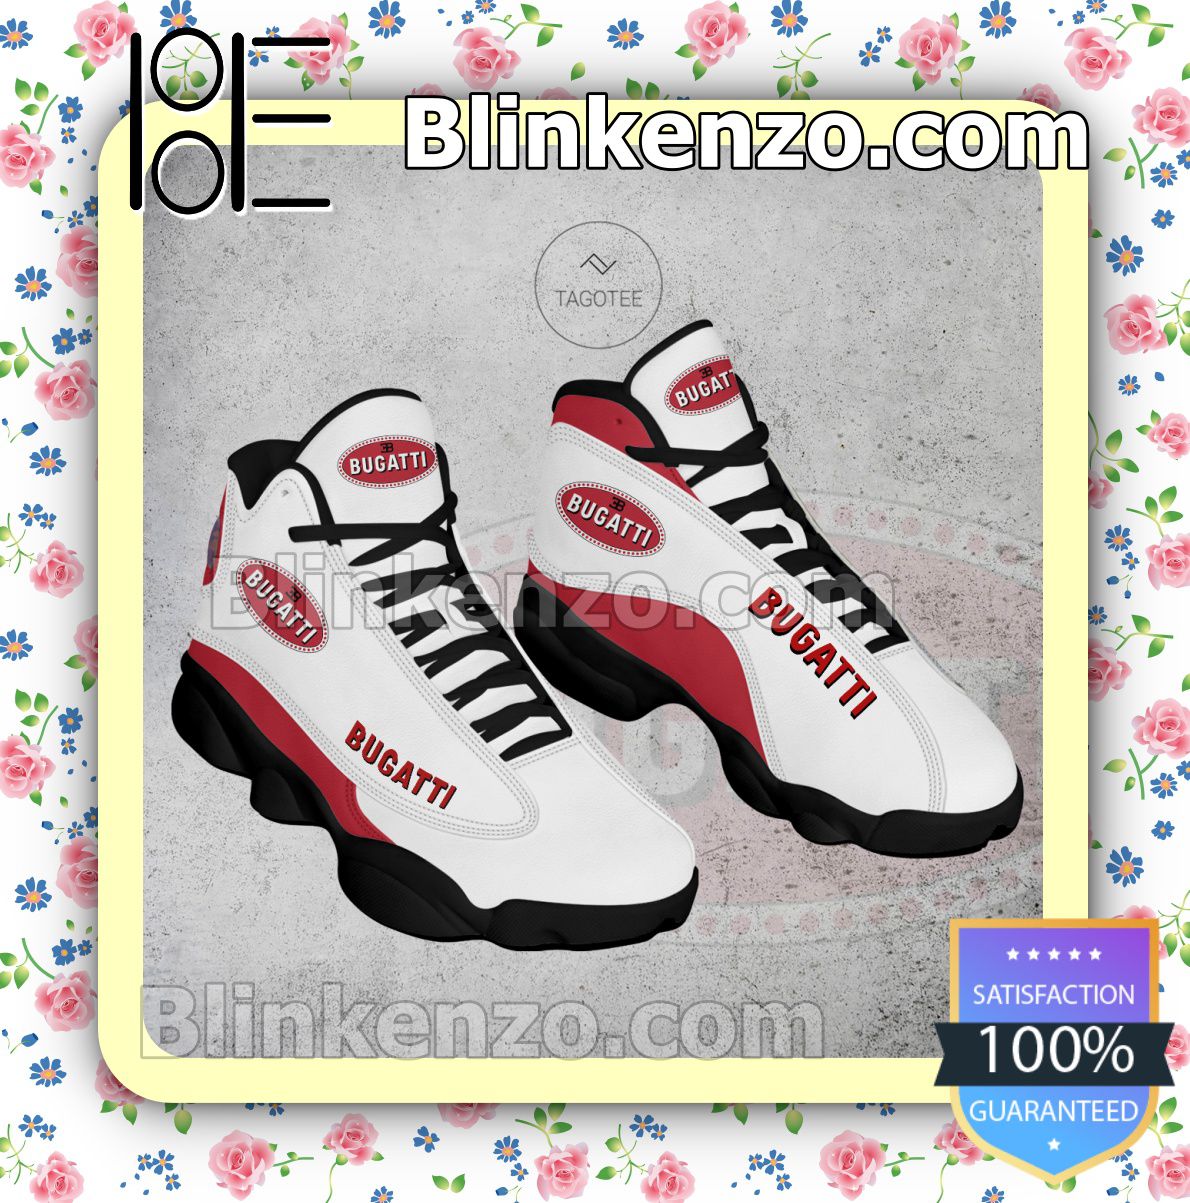 raket Tips wandelen Bugatti Brand Air Jordan 13 Retro Sneakers - Blinkenzo